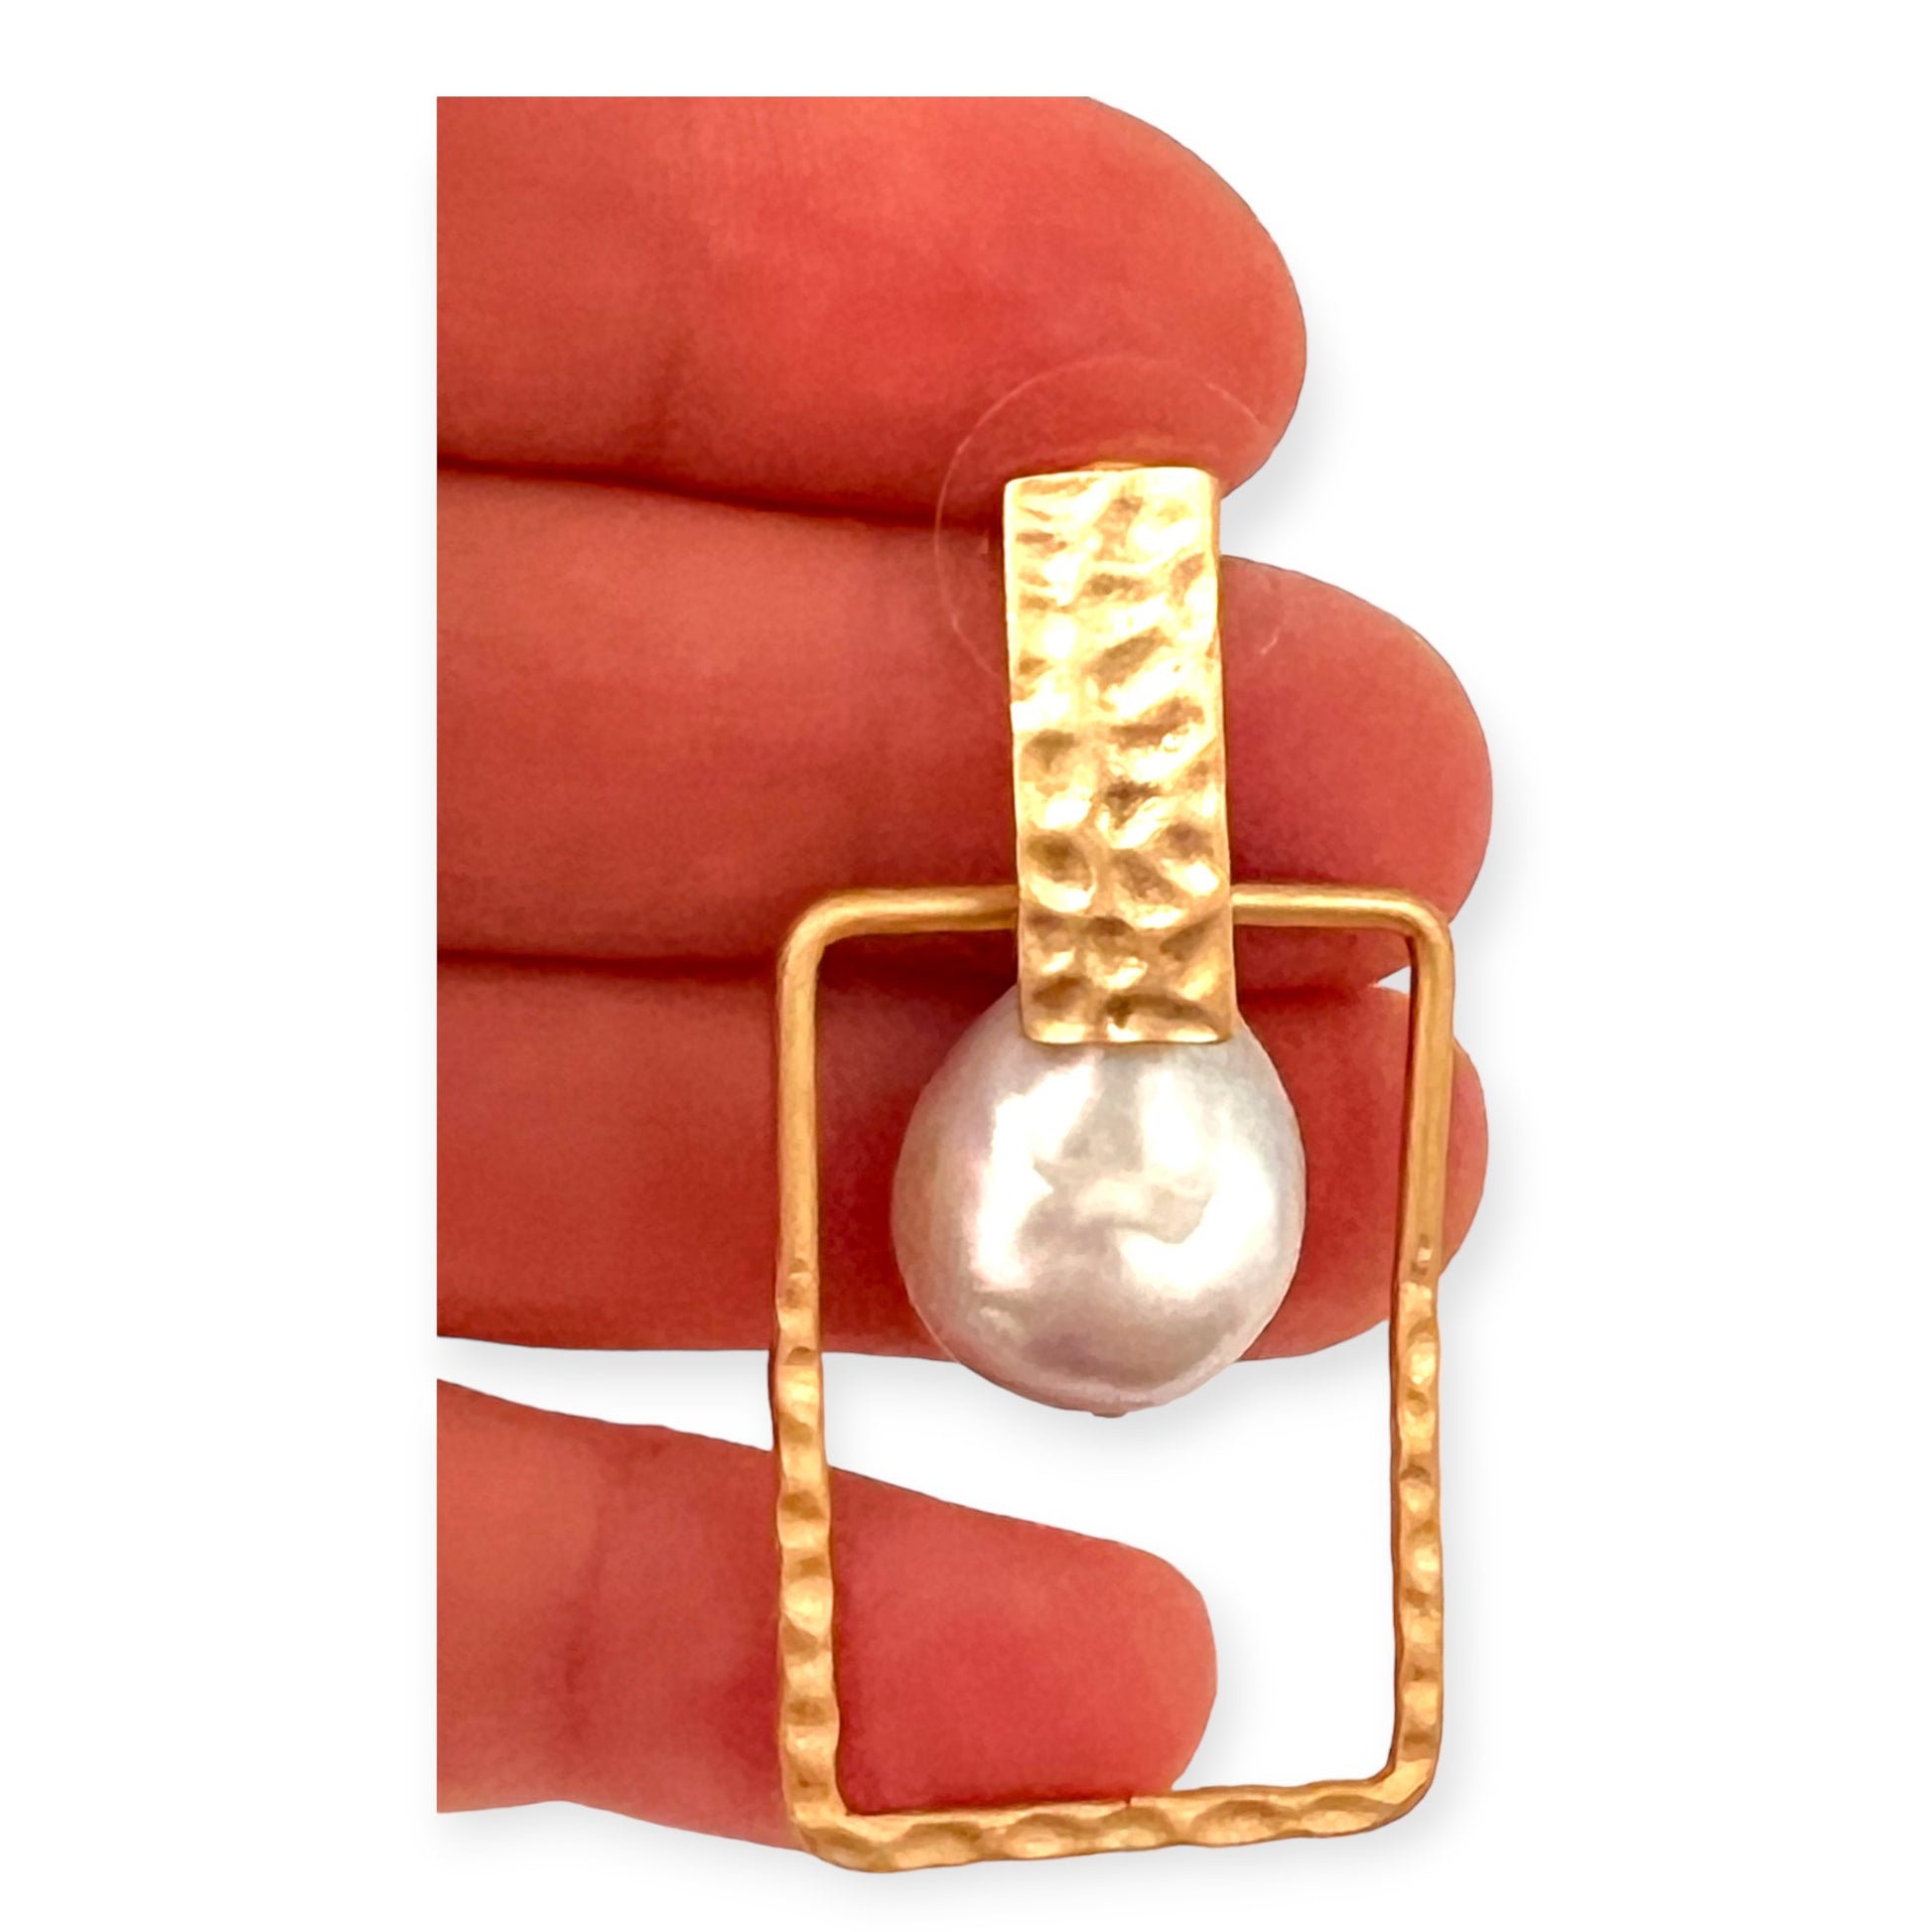 Pearl in a square drop statement earrings - Sundara Joon